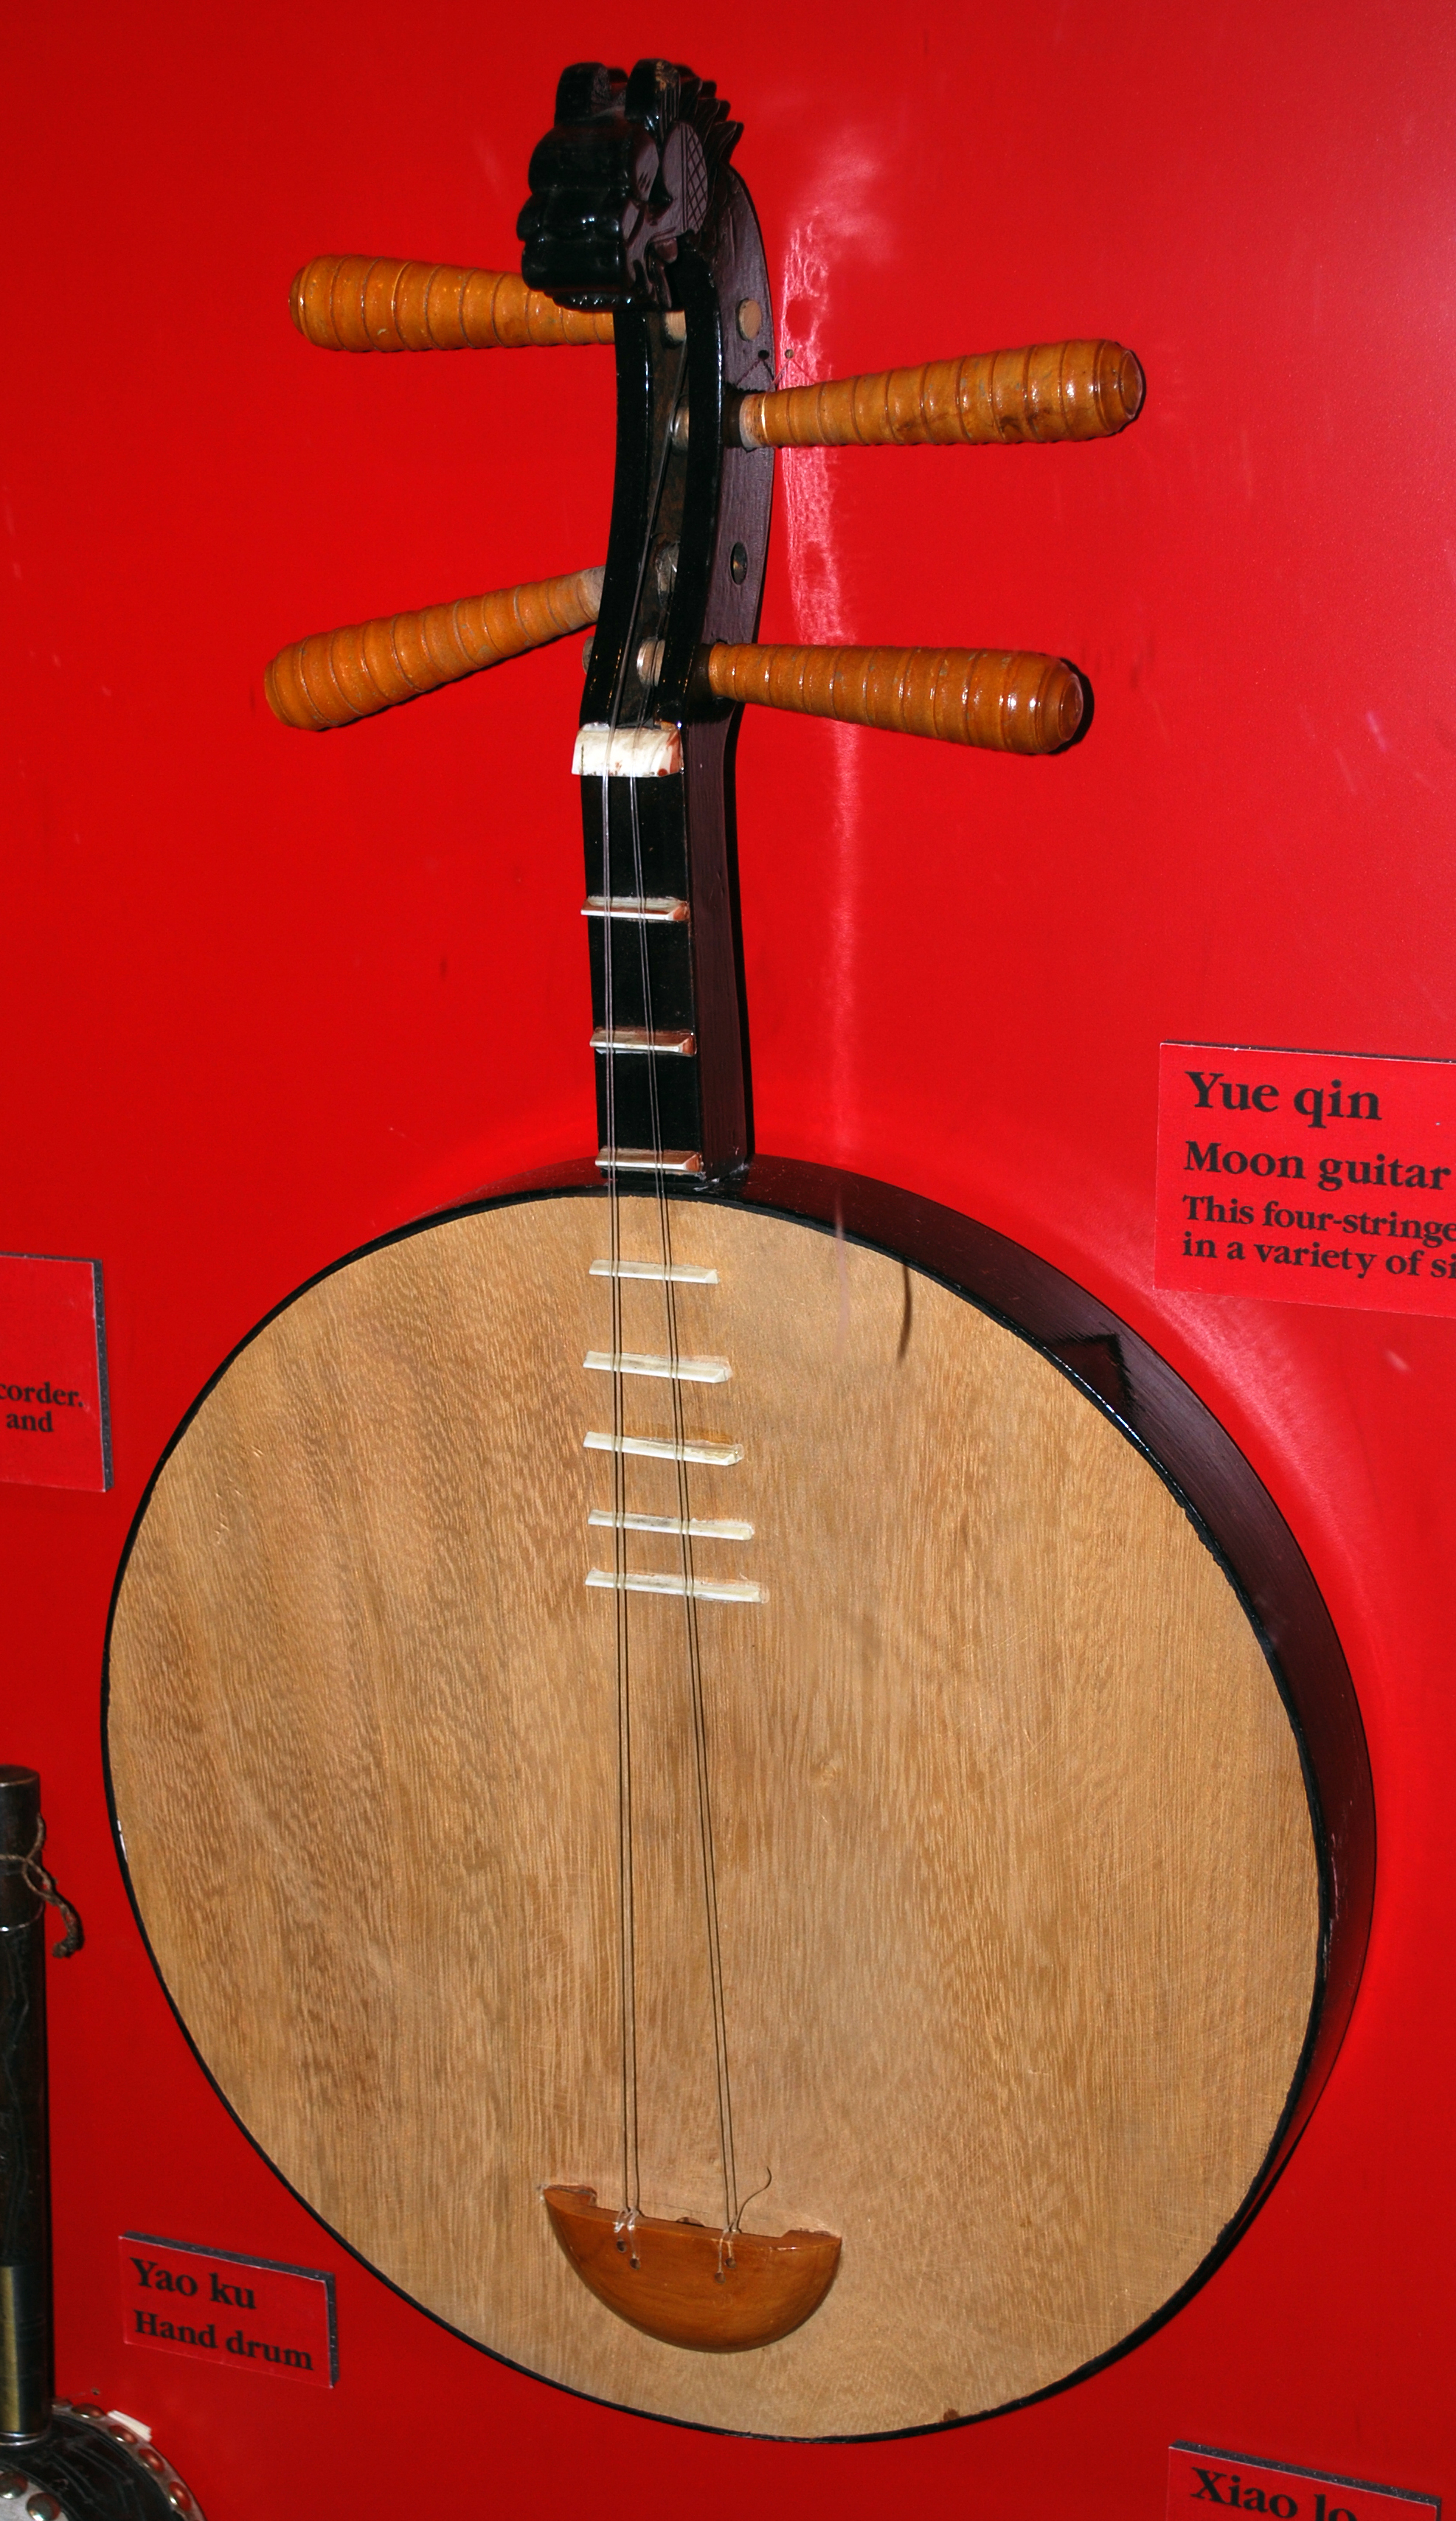 Object: Guitar (yueqin (moon guitar))